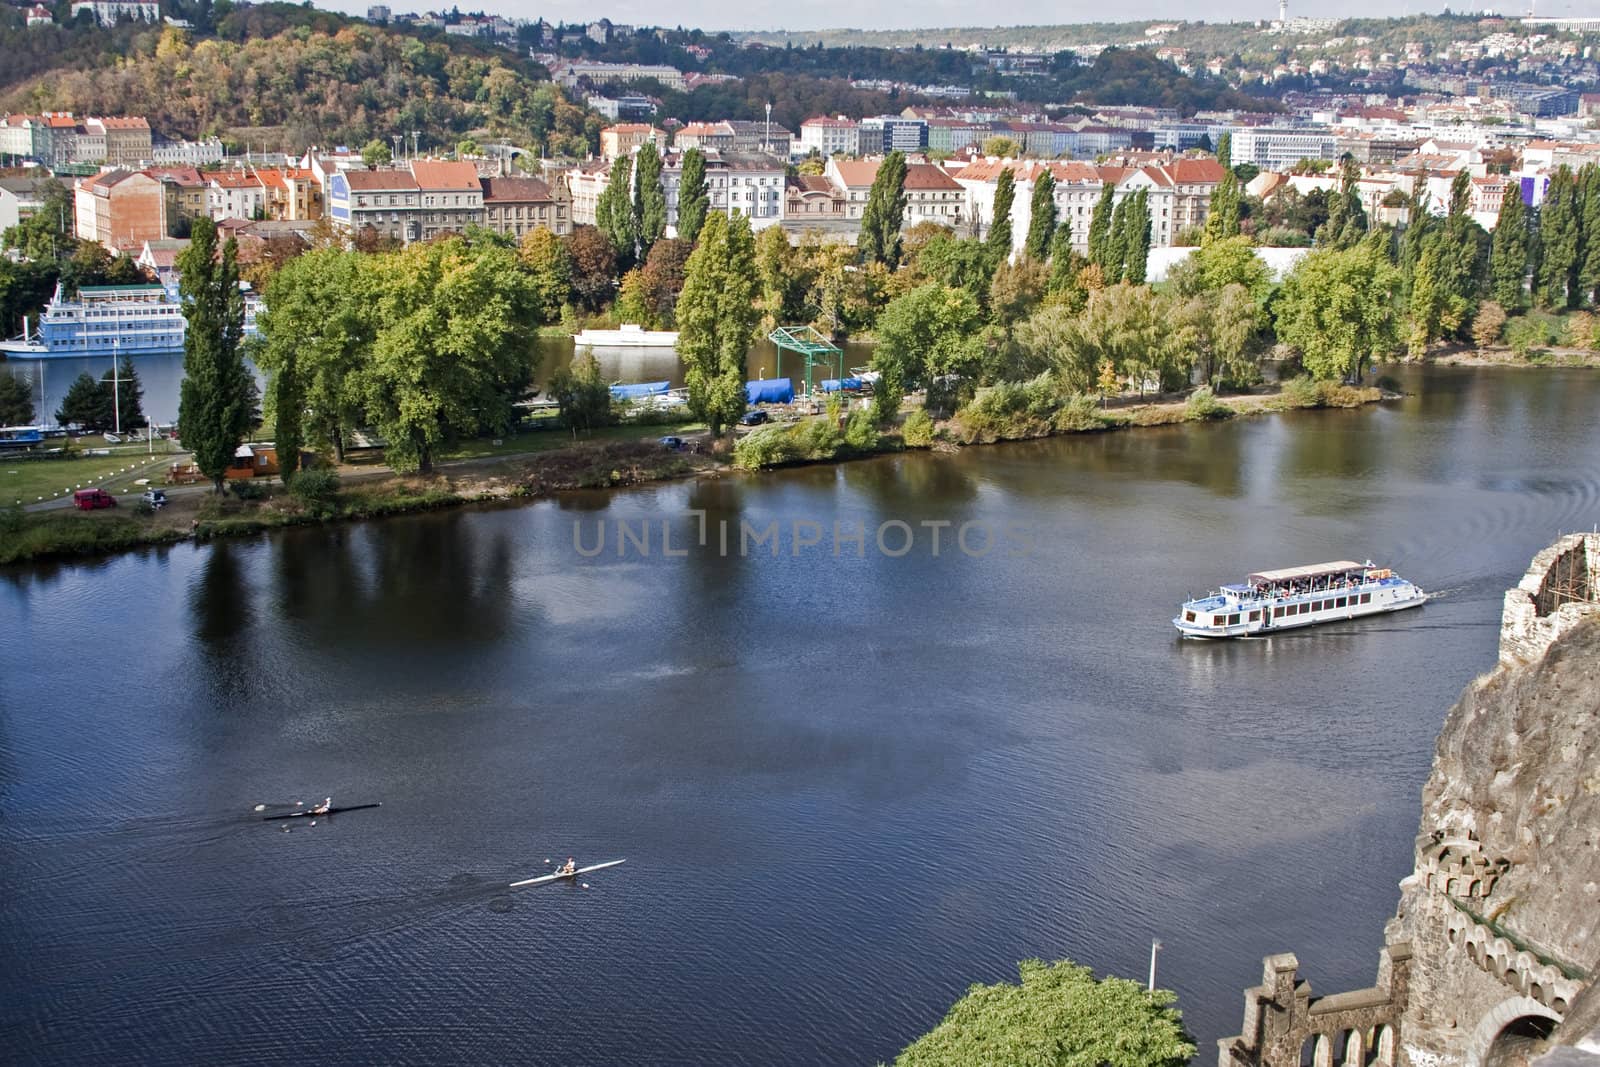  	
panorama, Prague, the Vltava river, the boat, kayaks